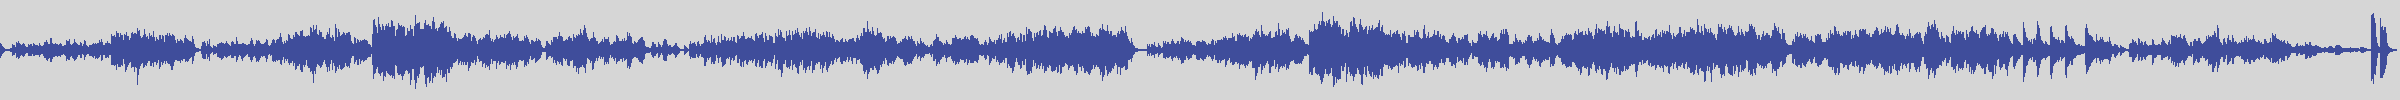 big_music_classic [BMC002] Frédéric Chopin, C Red - Mazurka Op.50 N.3 [] audio wave form